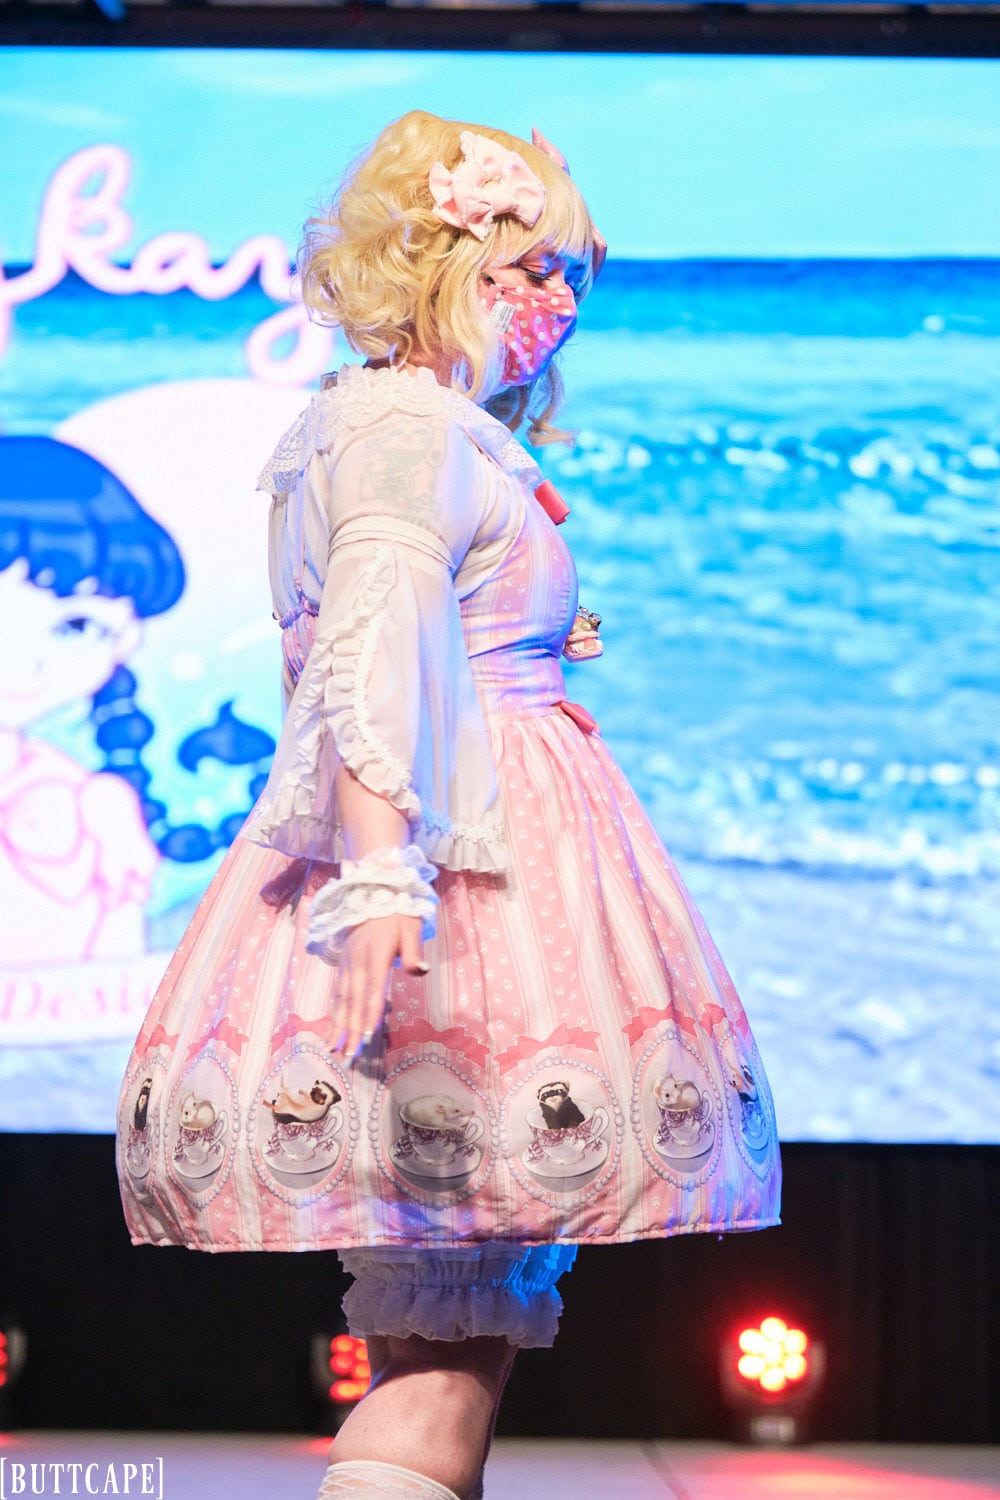 Kittykaya model 4 wearing pink lolita dress with tea cup theme and polka dot fabric - closeup 2.